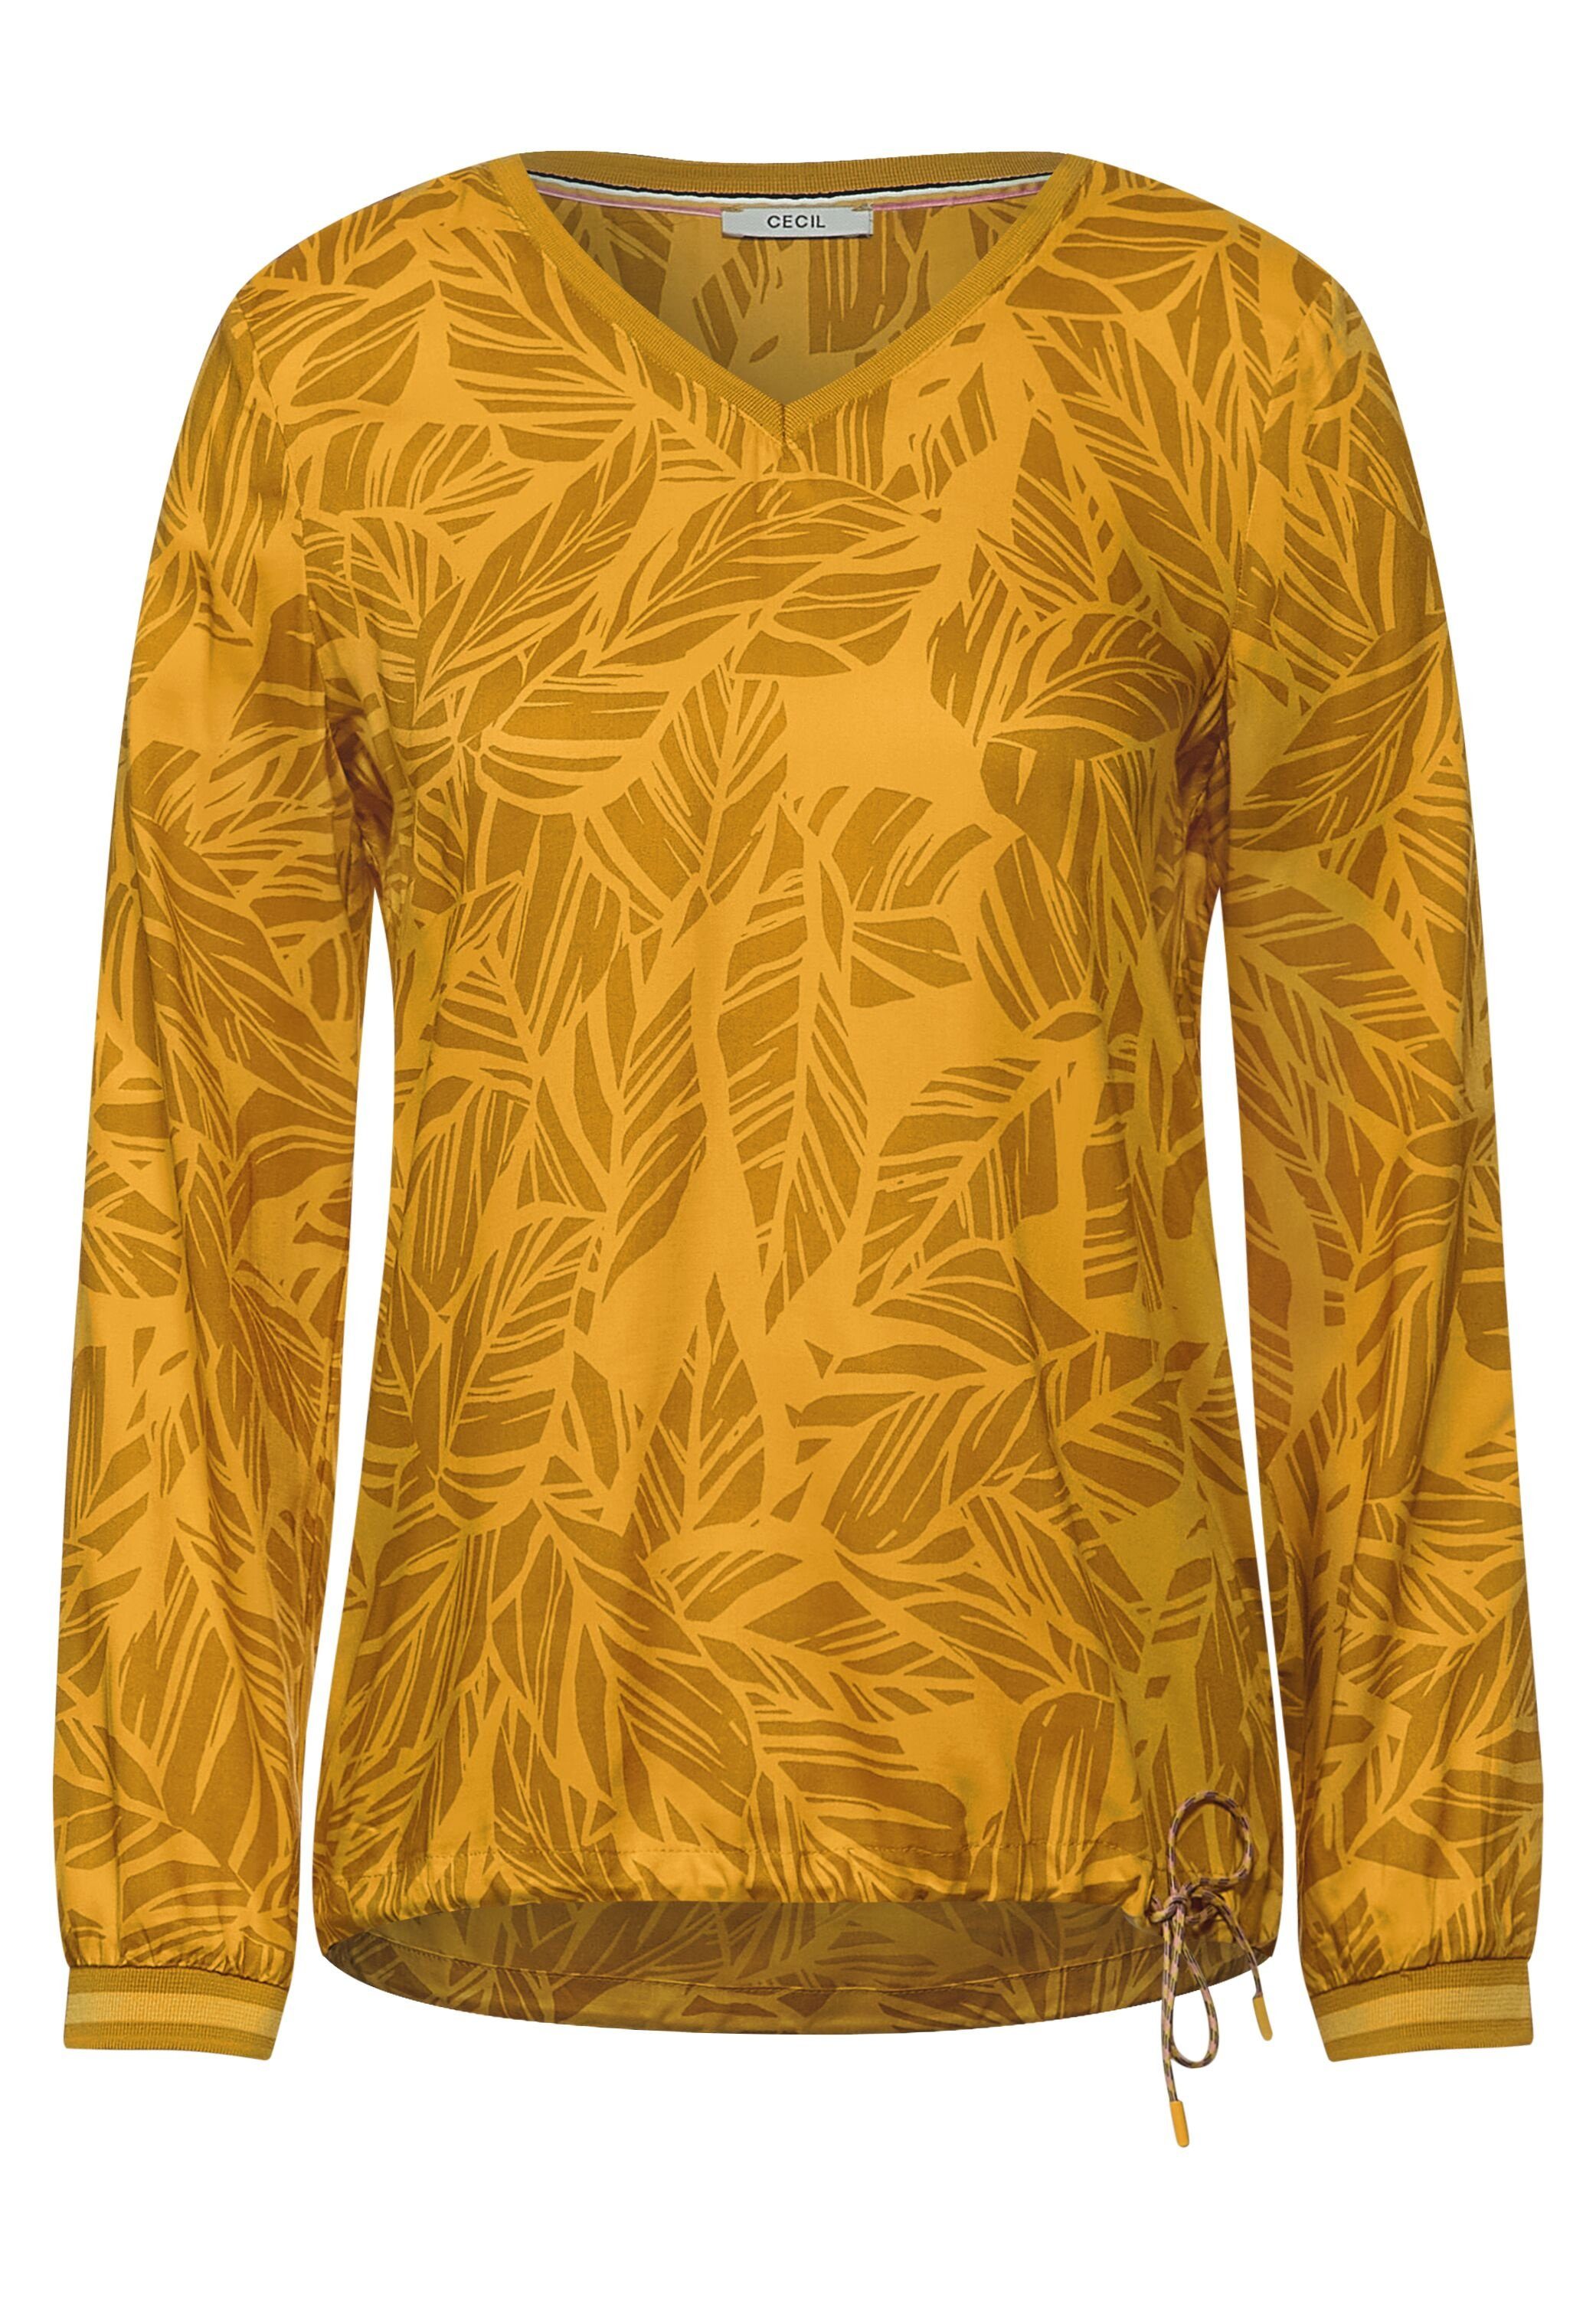 Cecil Klassische Bluse Bluse mit Blätter Print curry yellow